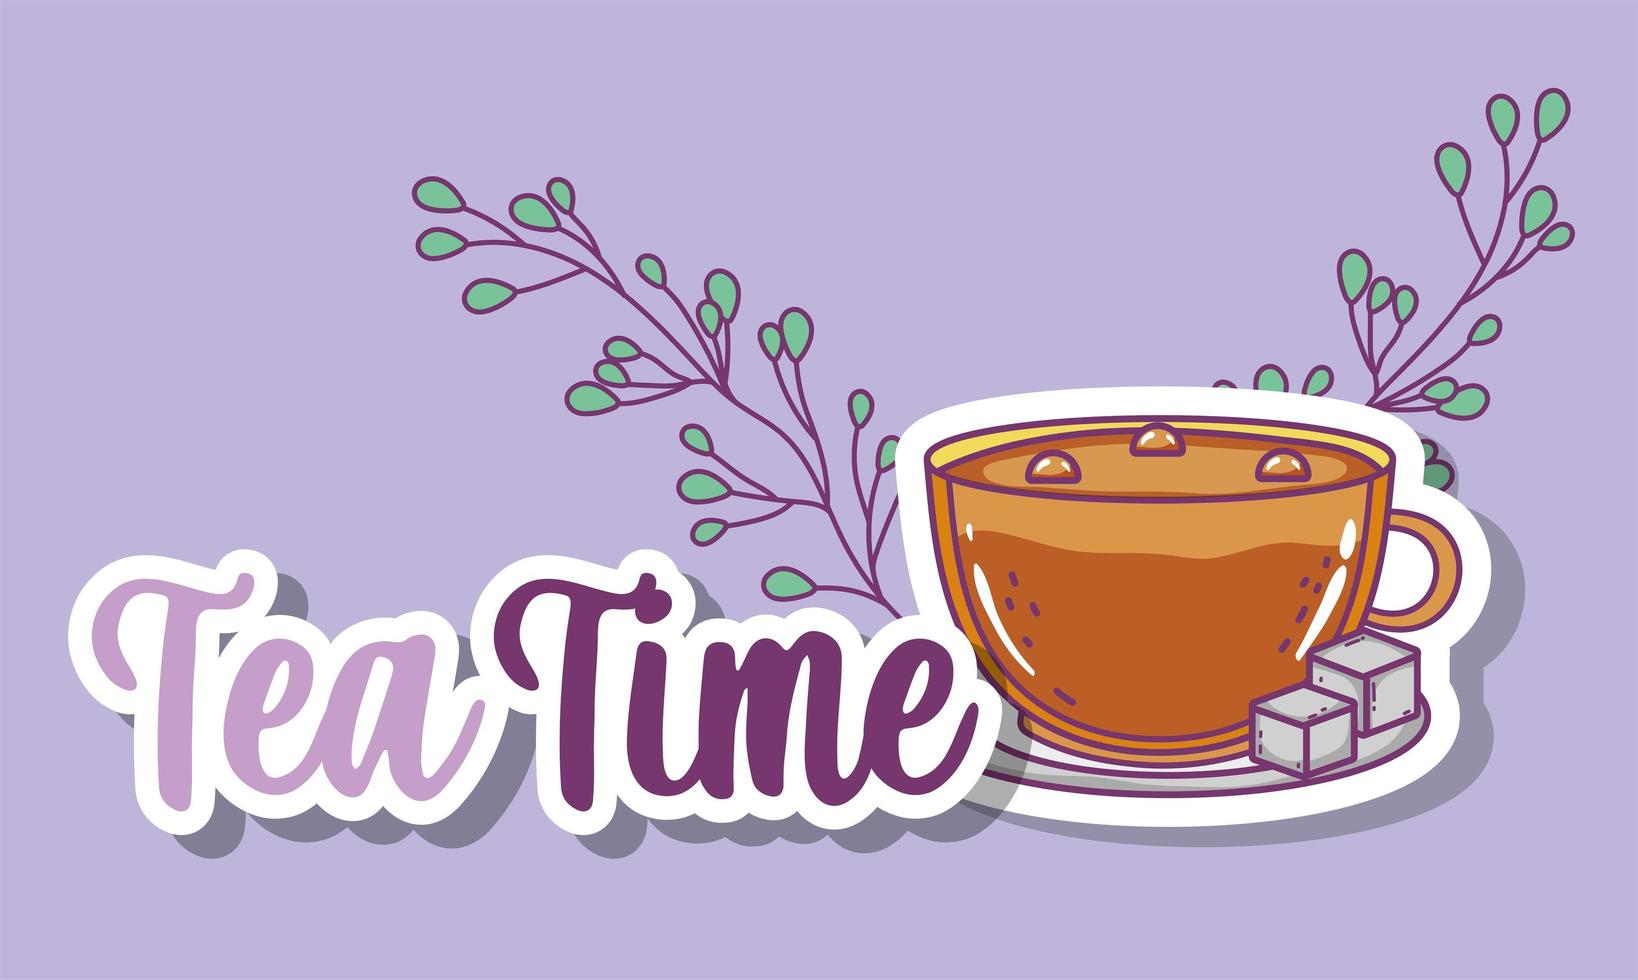 tea time sketch flat design vector